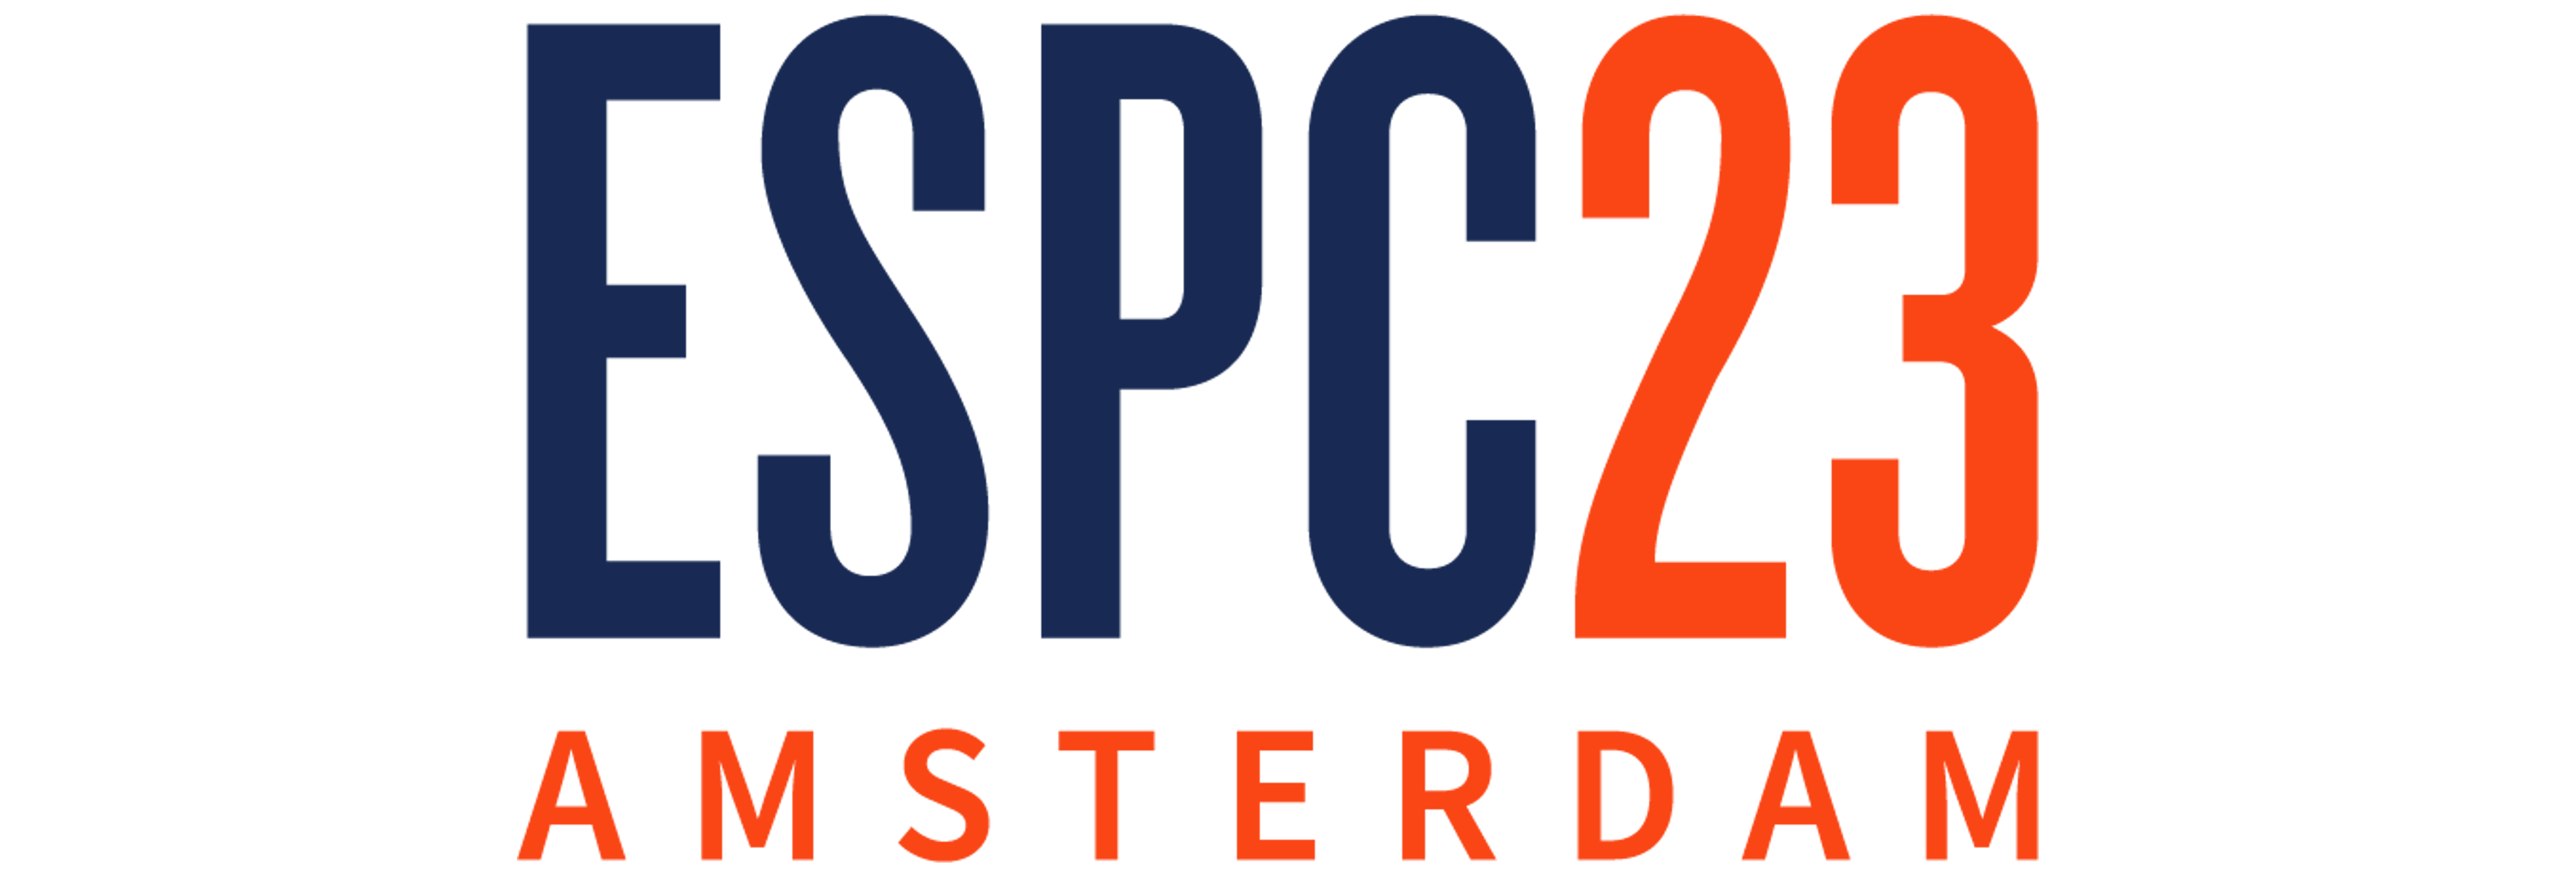 ESPC23 Amsterdam